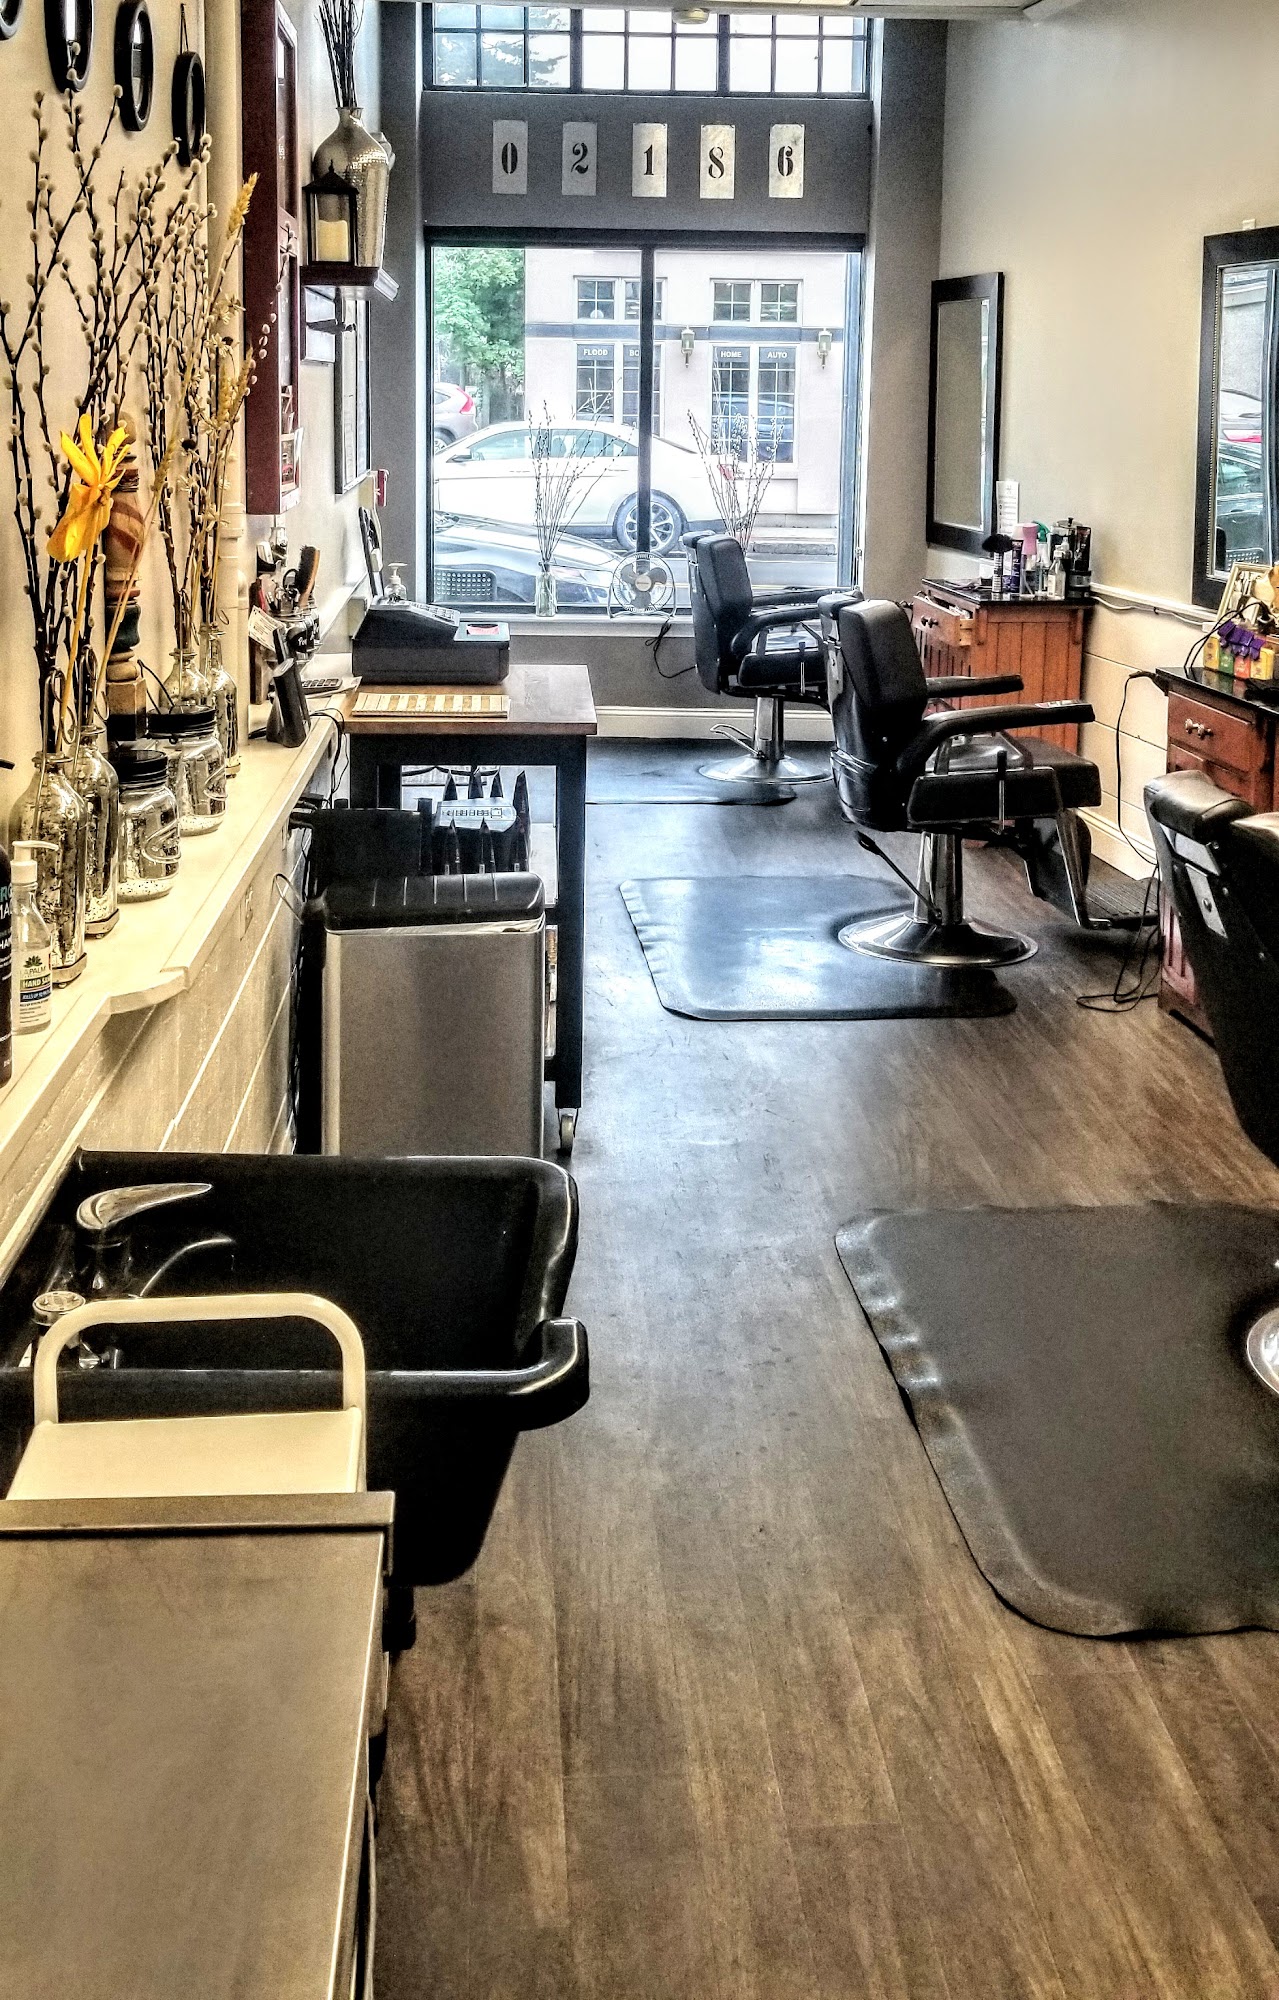 The Milton Barber Shop